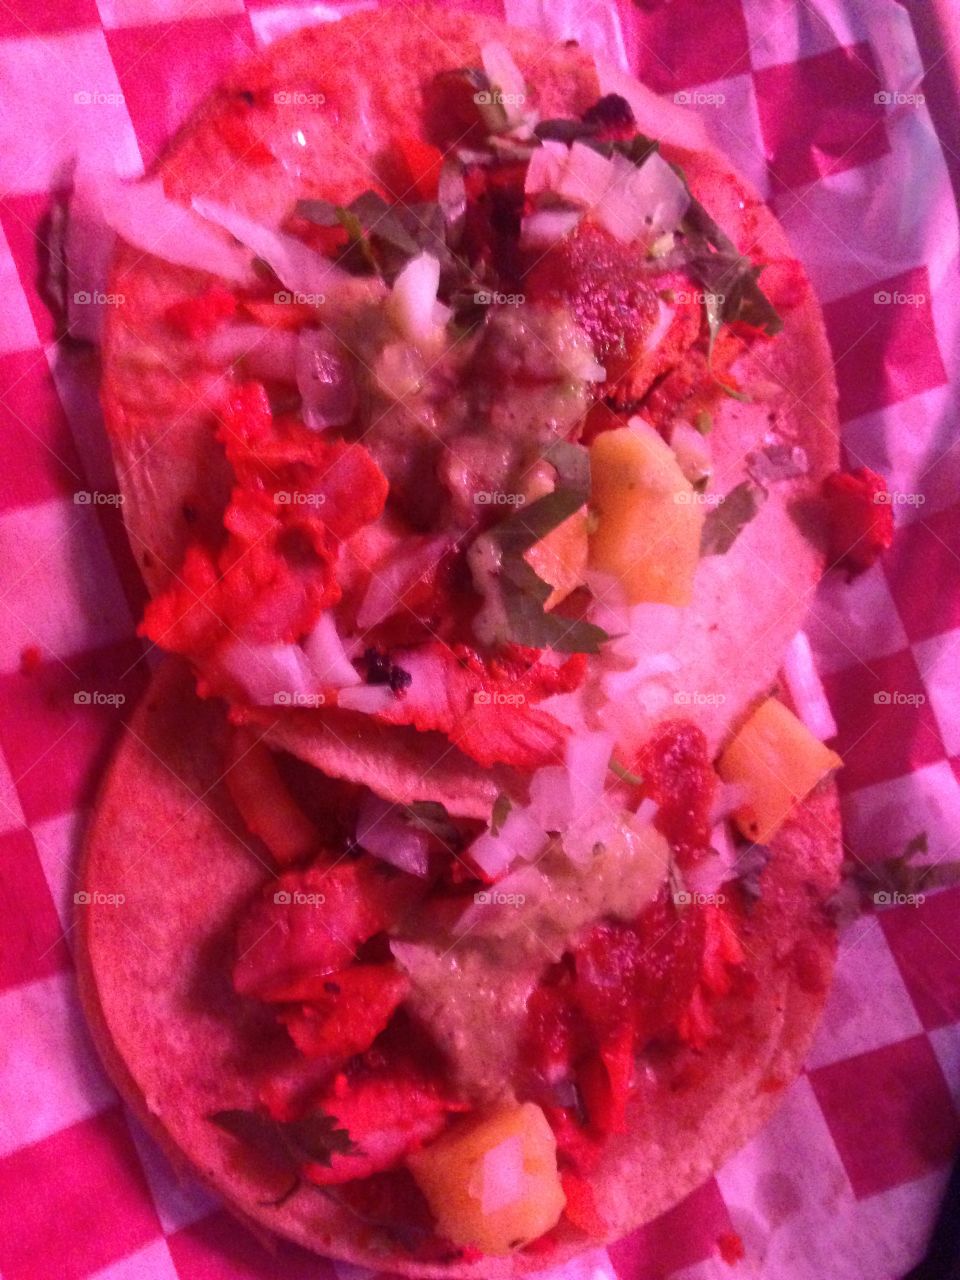 Wow street tacos mmm!!!!!